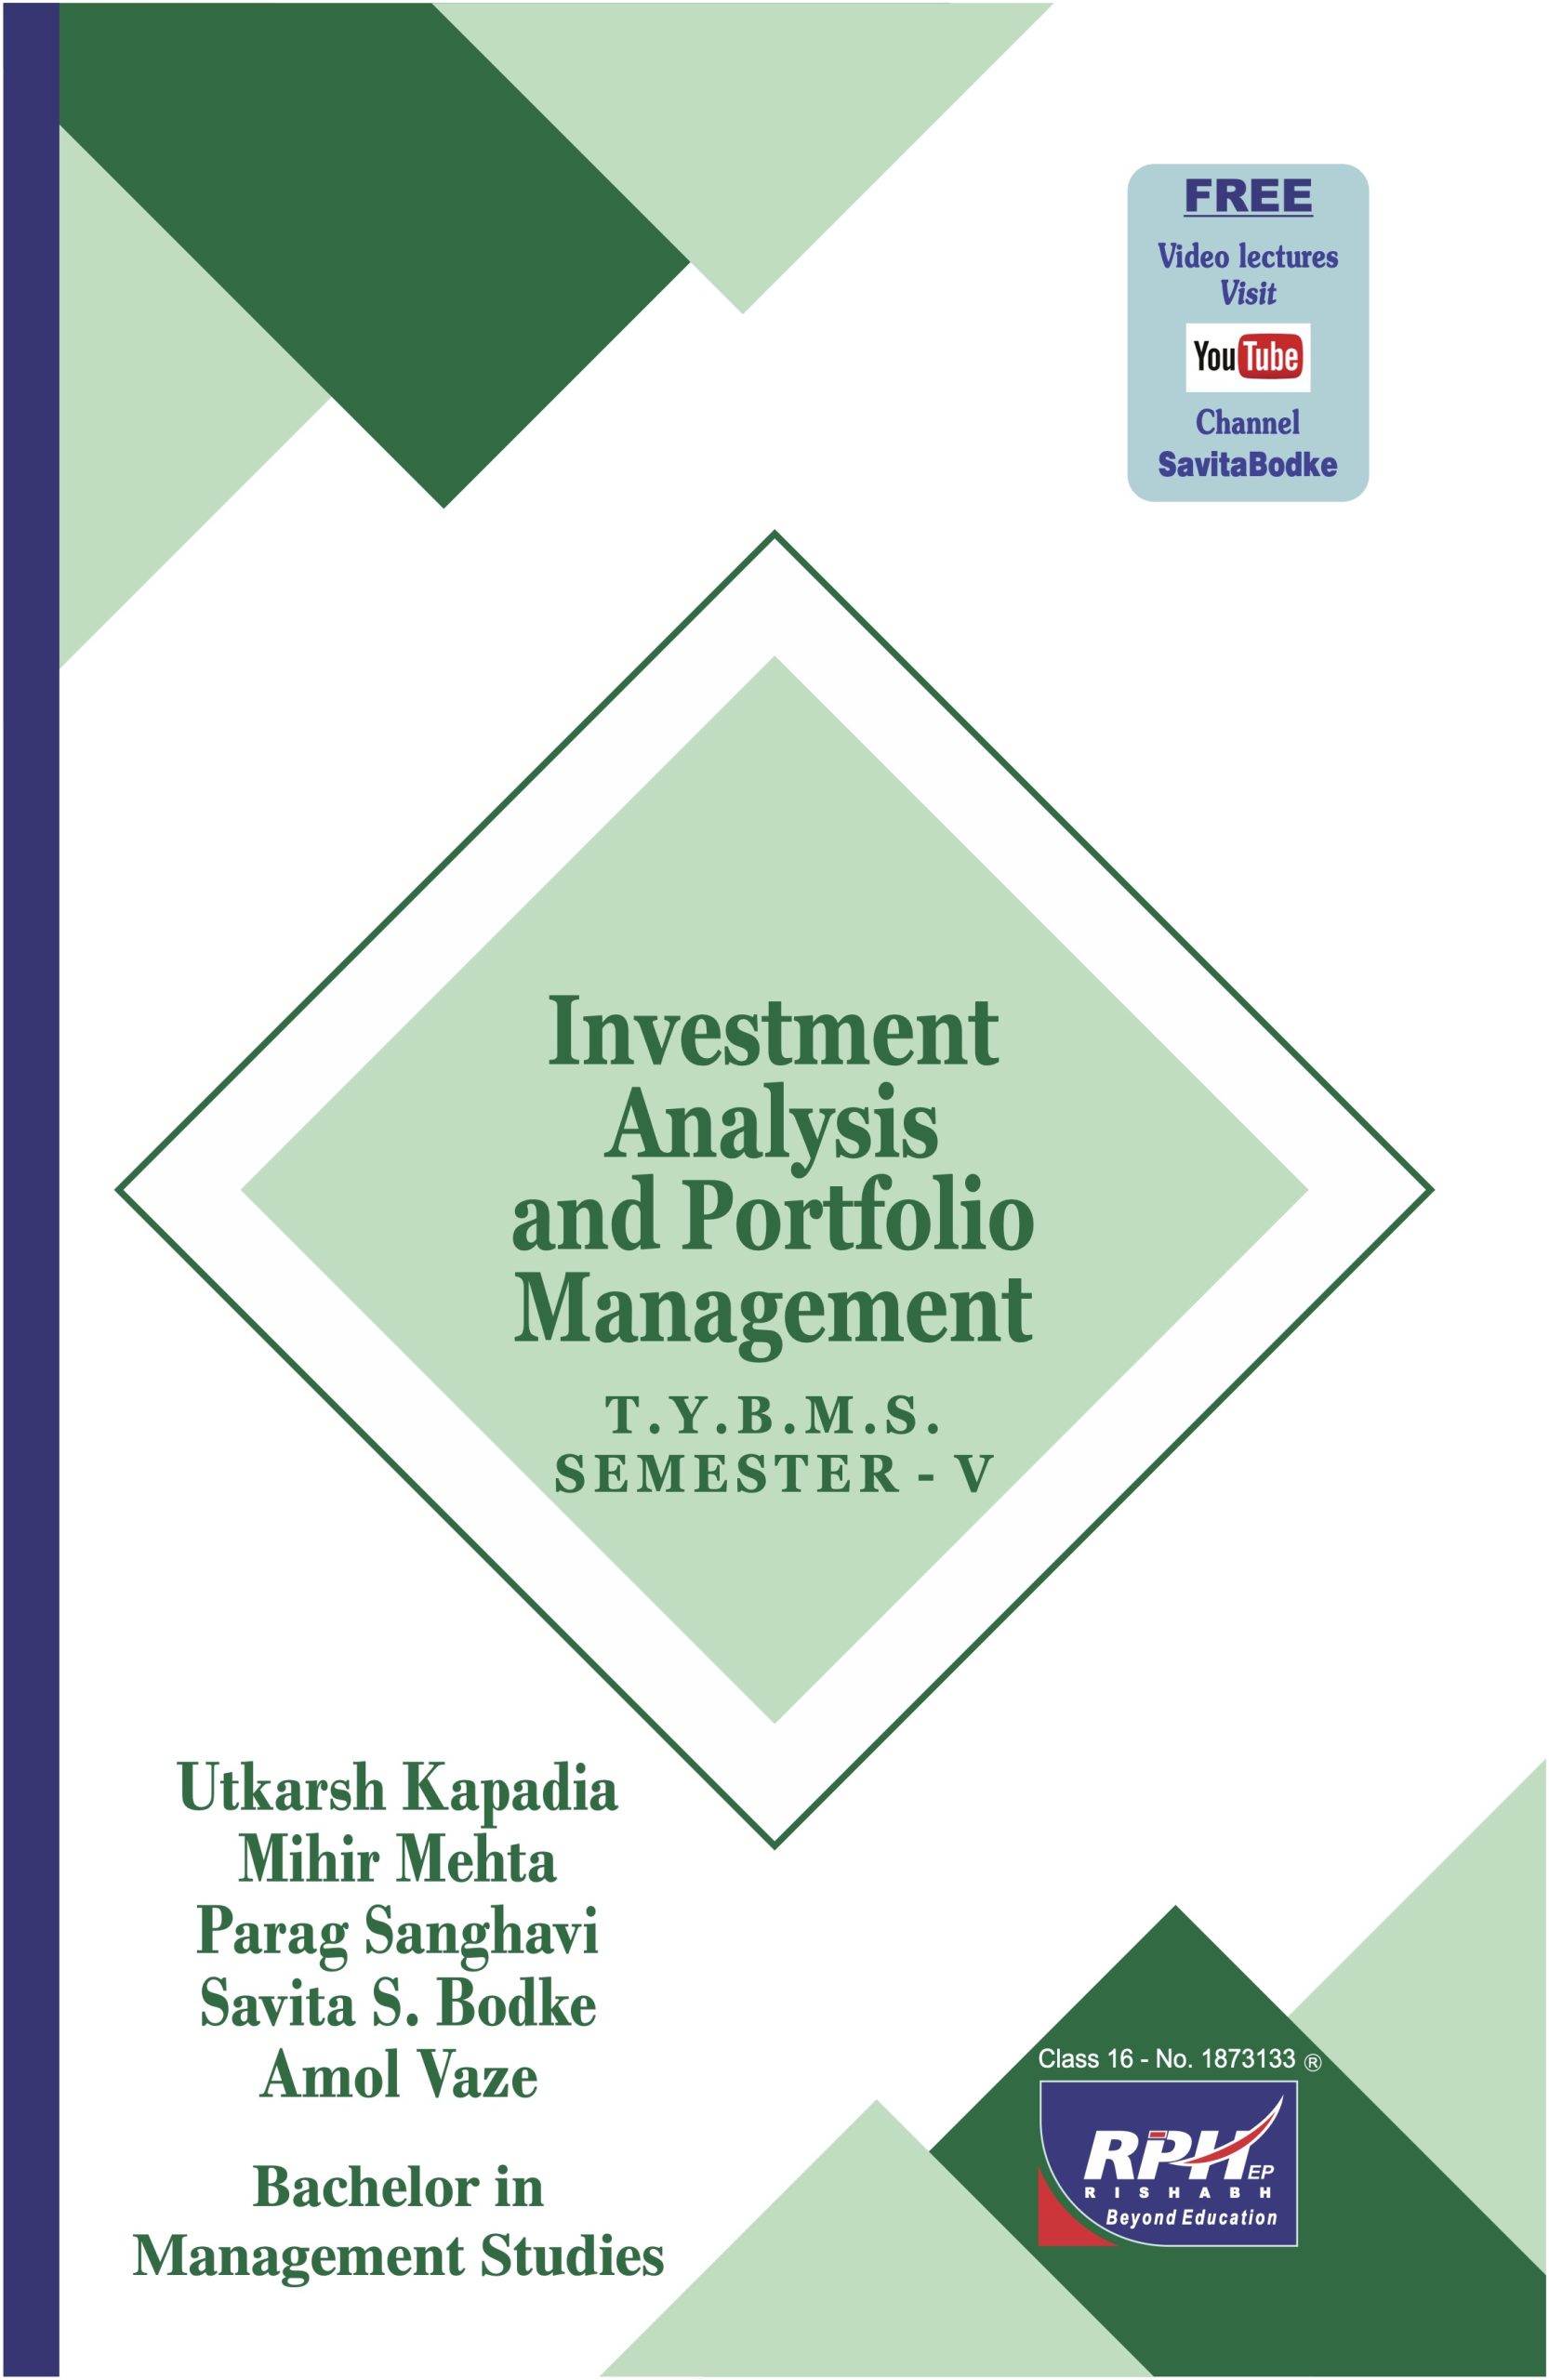 Investment Analysis and Portfolio Management 2